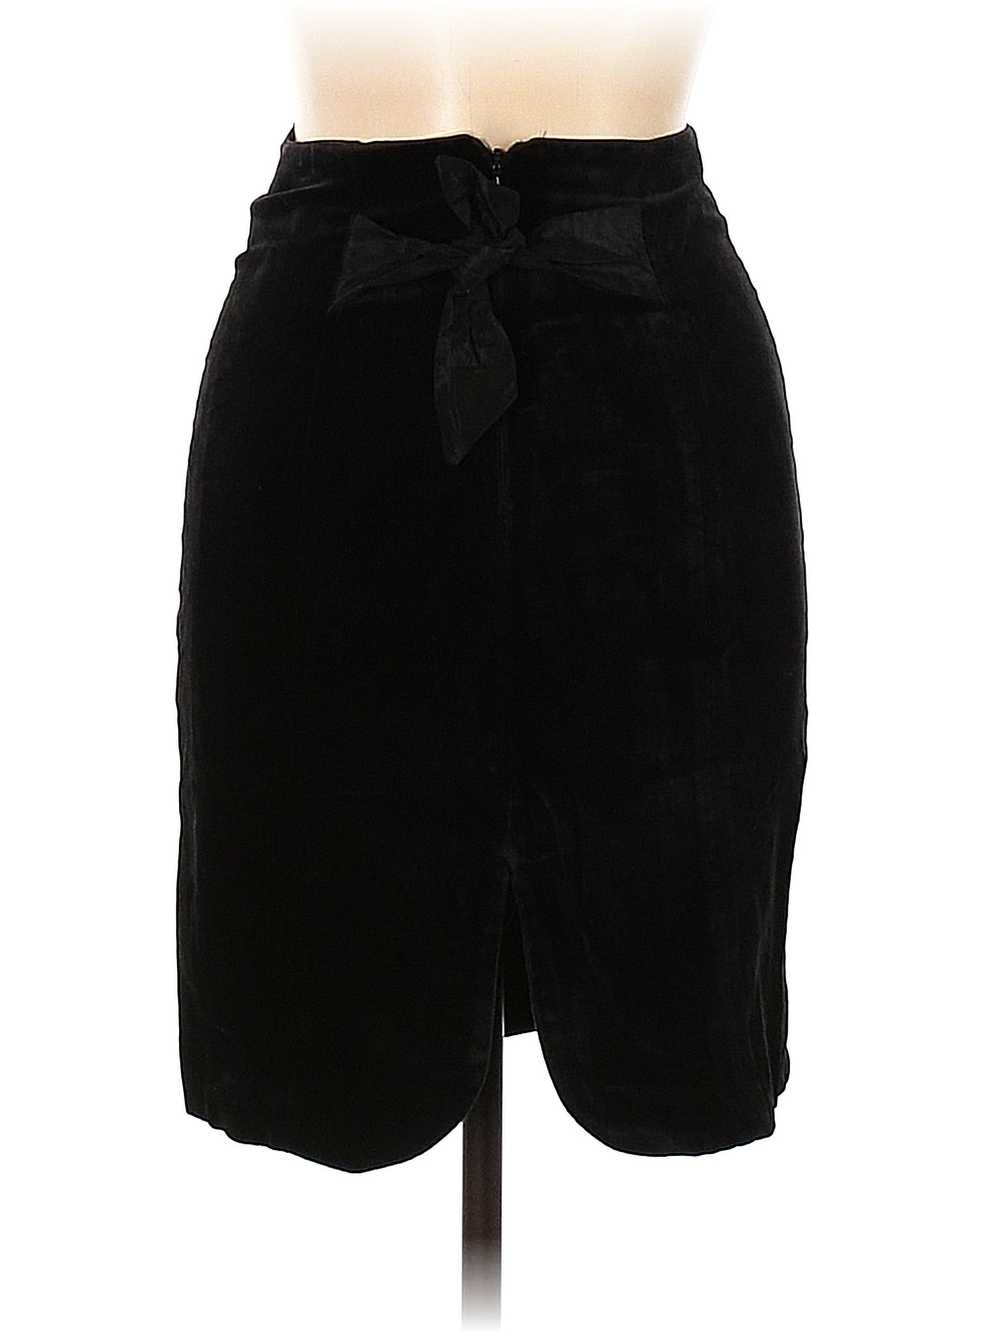 Laura Ashley Women Black Casual Skirt 10 - image 2